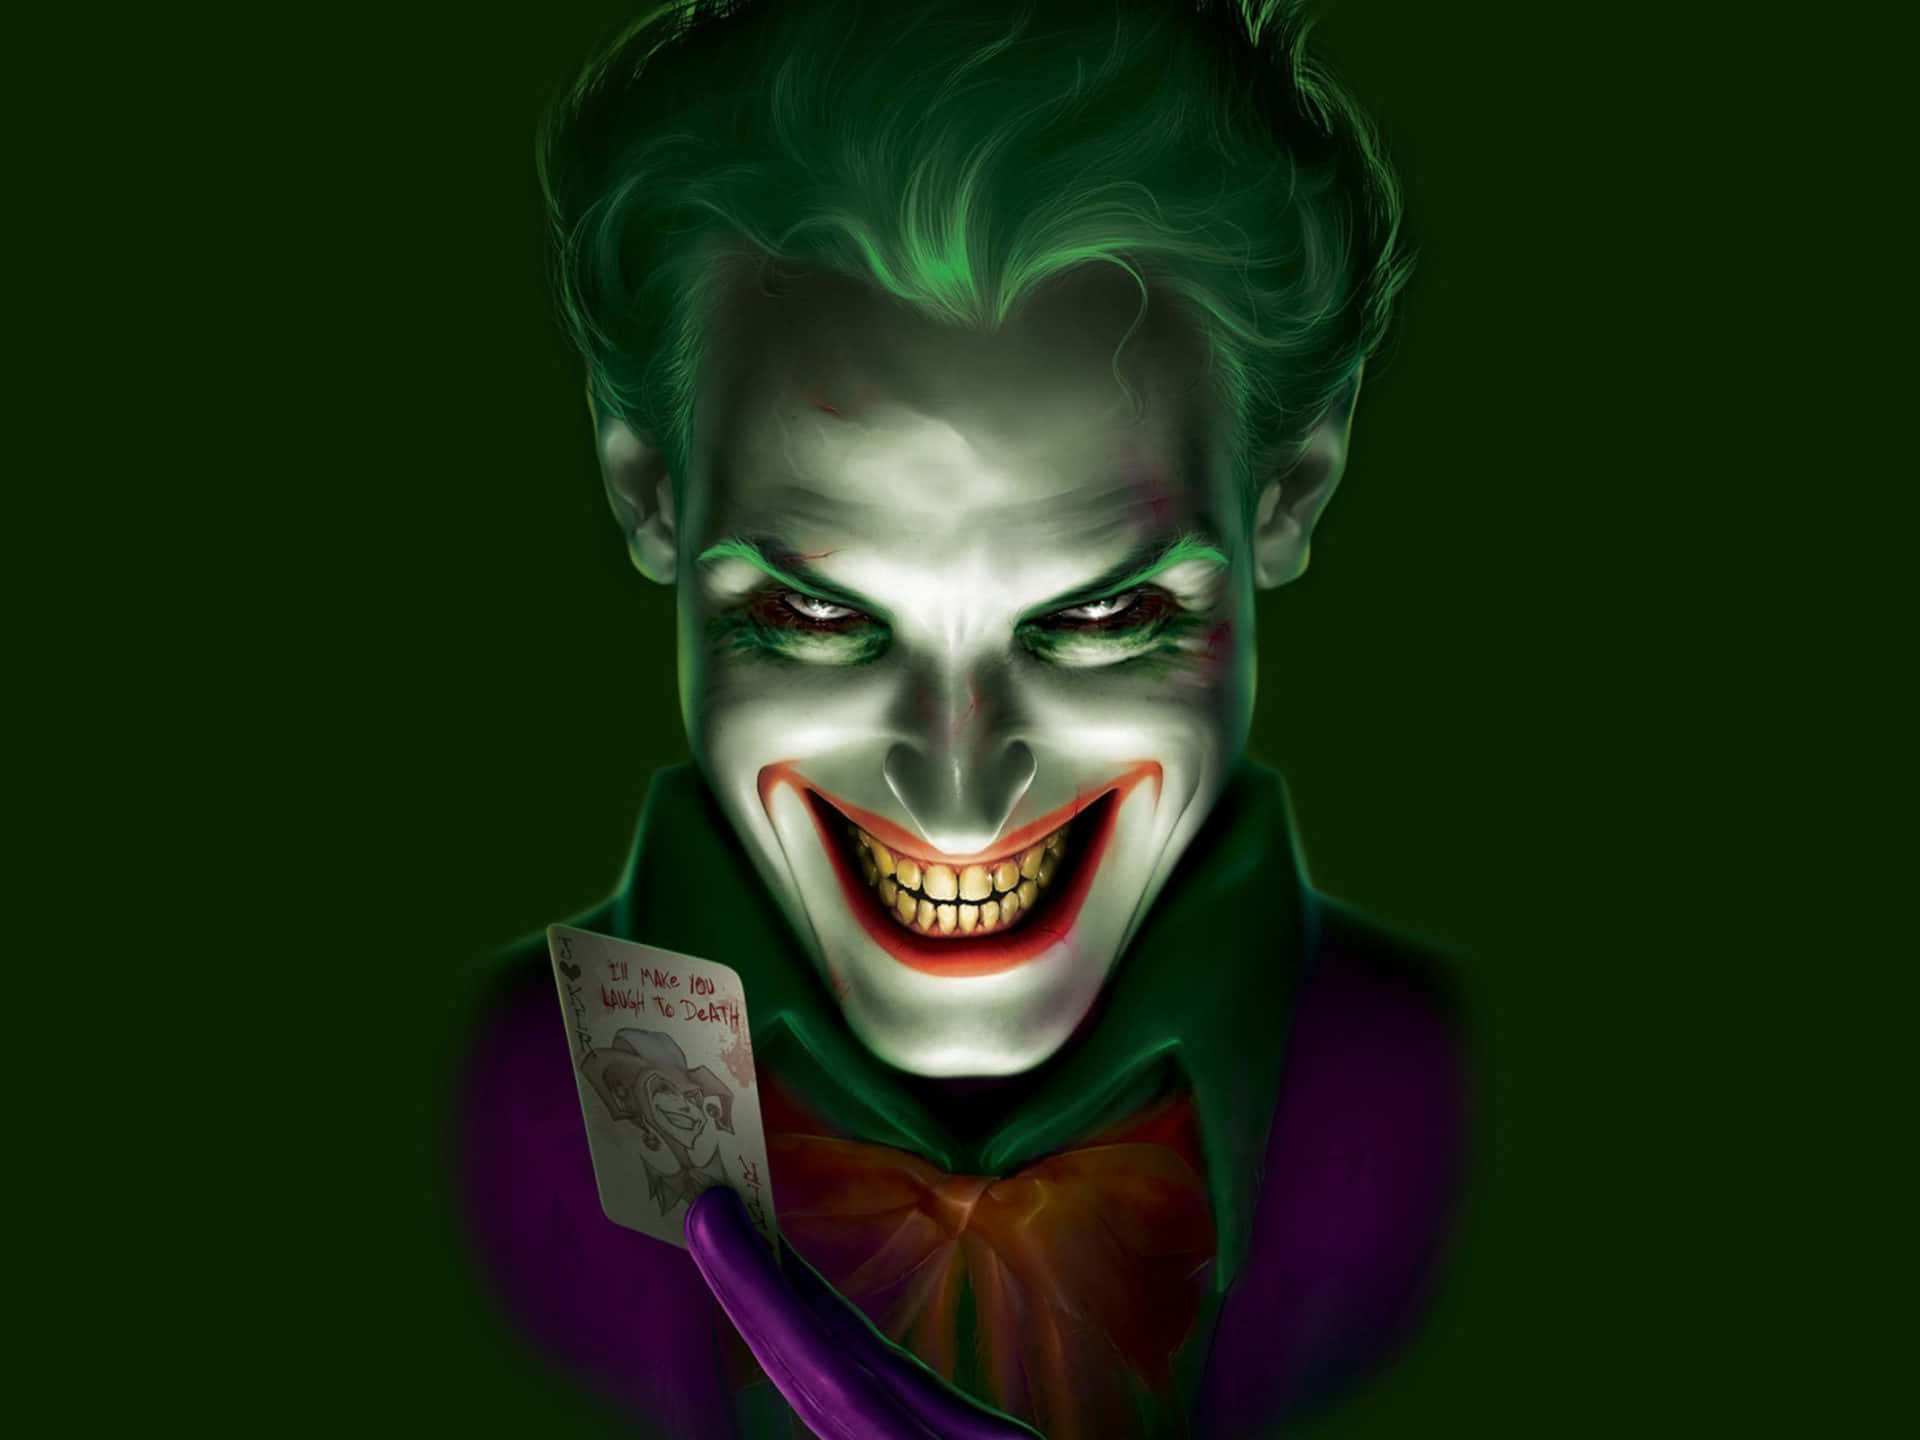 The Dark Harlequin: A Portrait Of The Joker